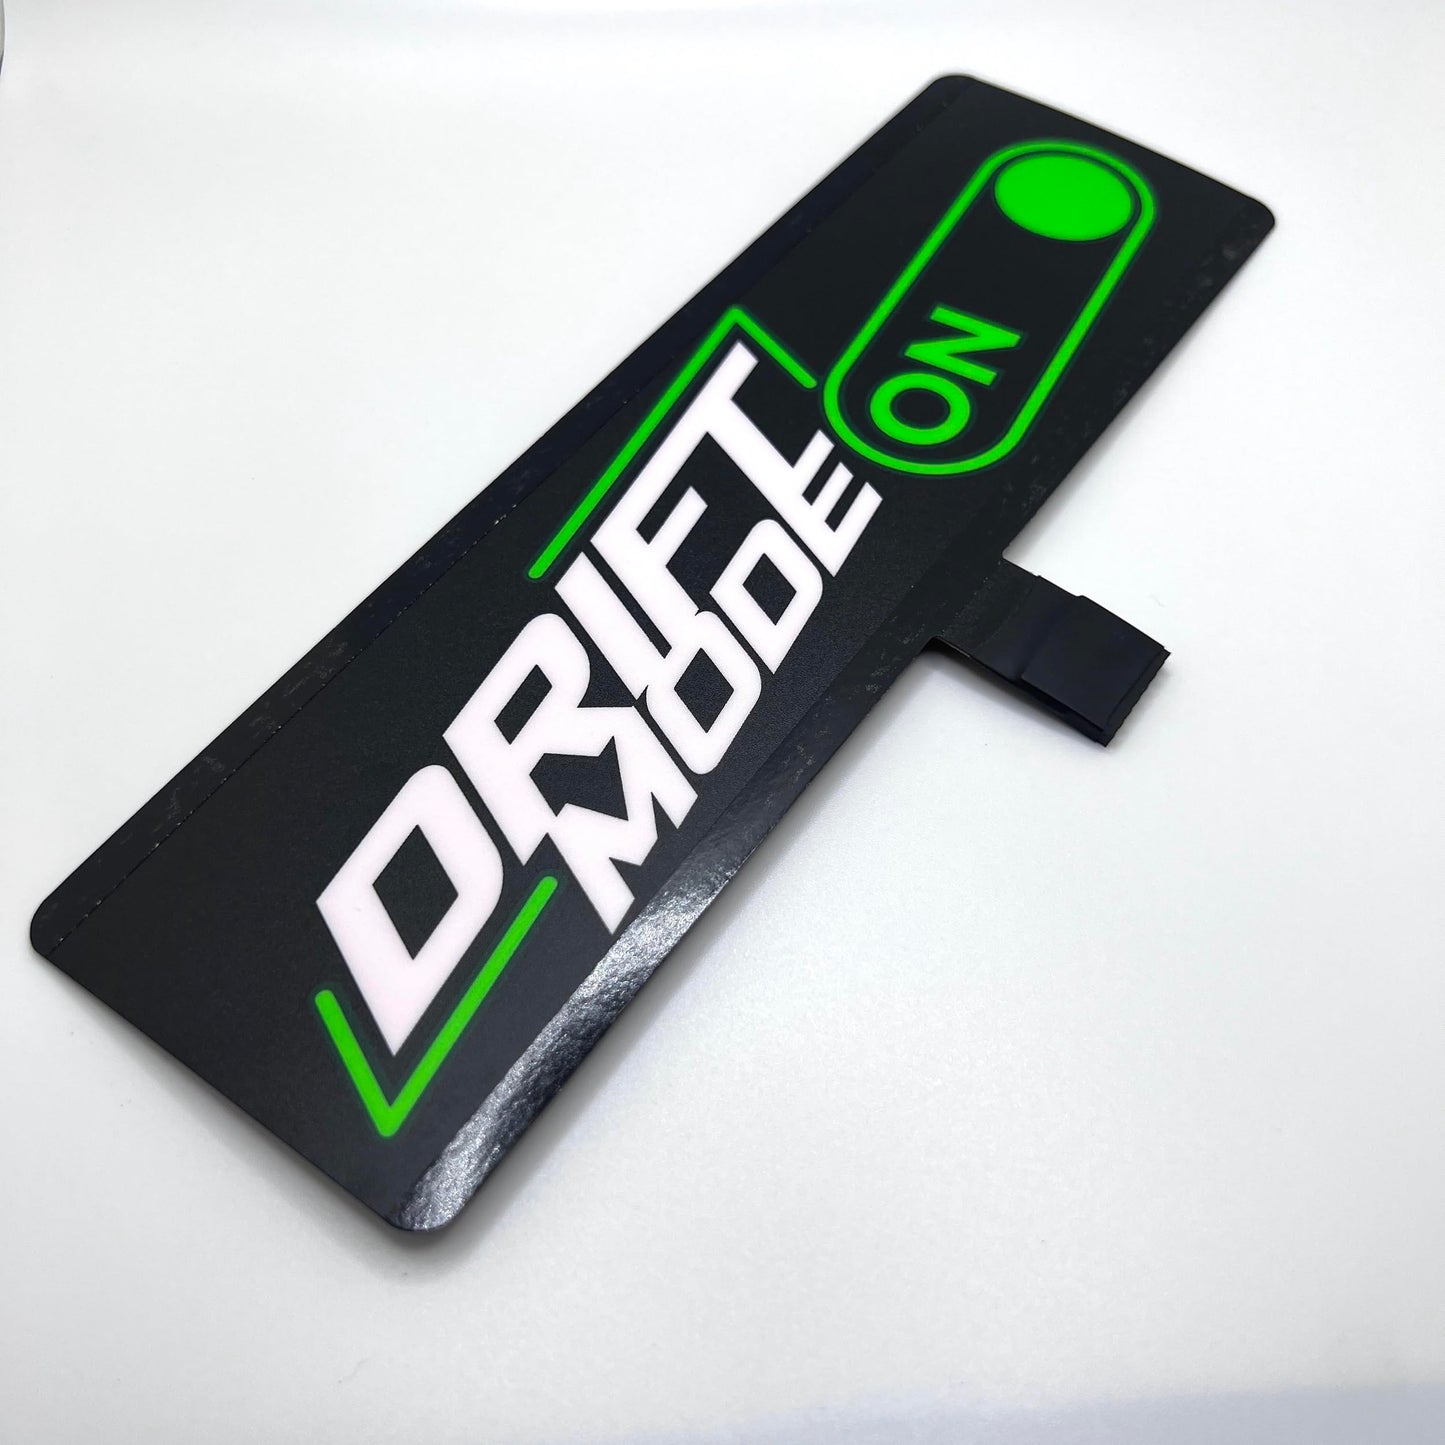 Drift Mode | LED Decal | USB Powered